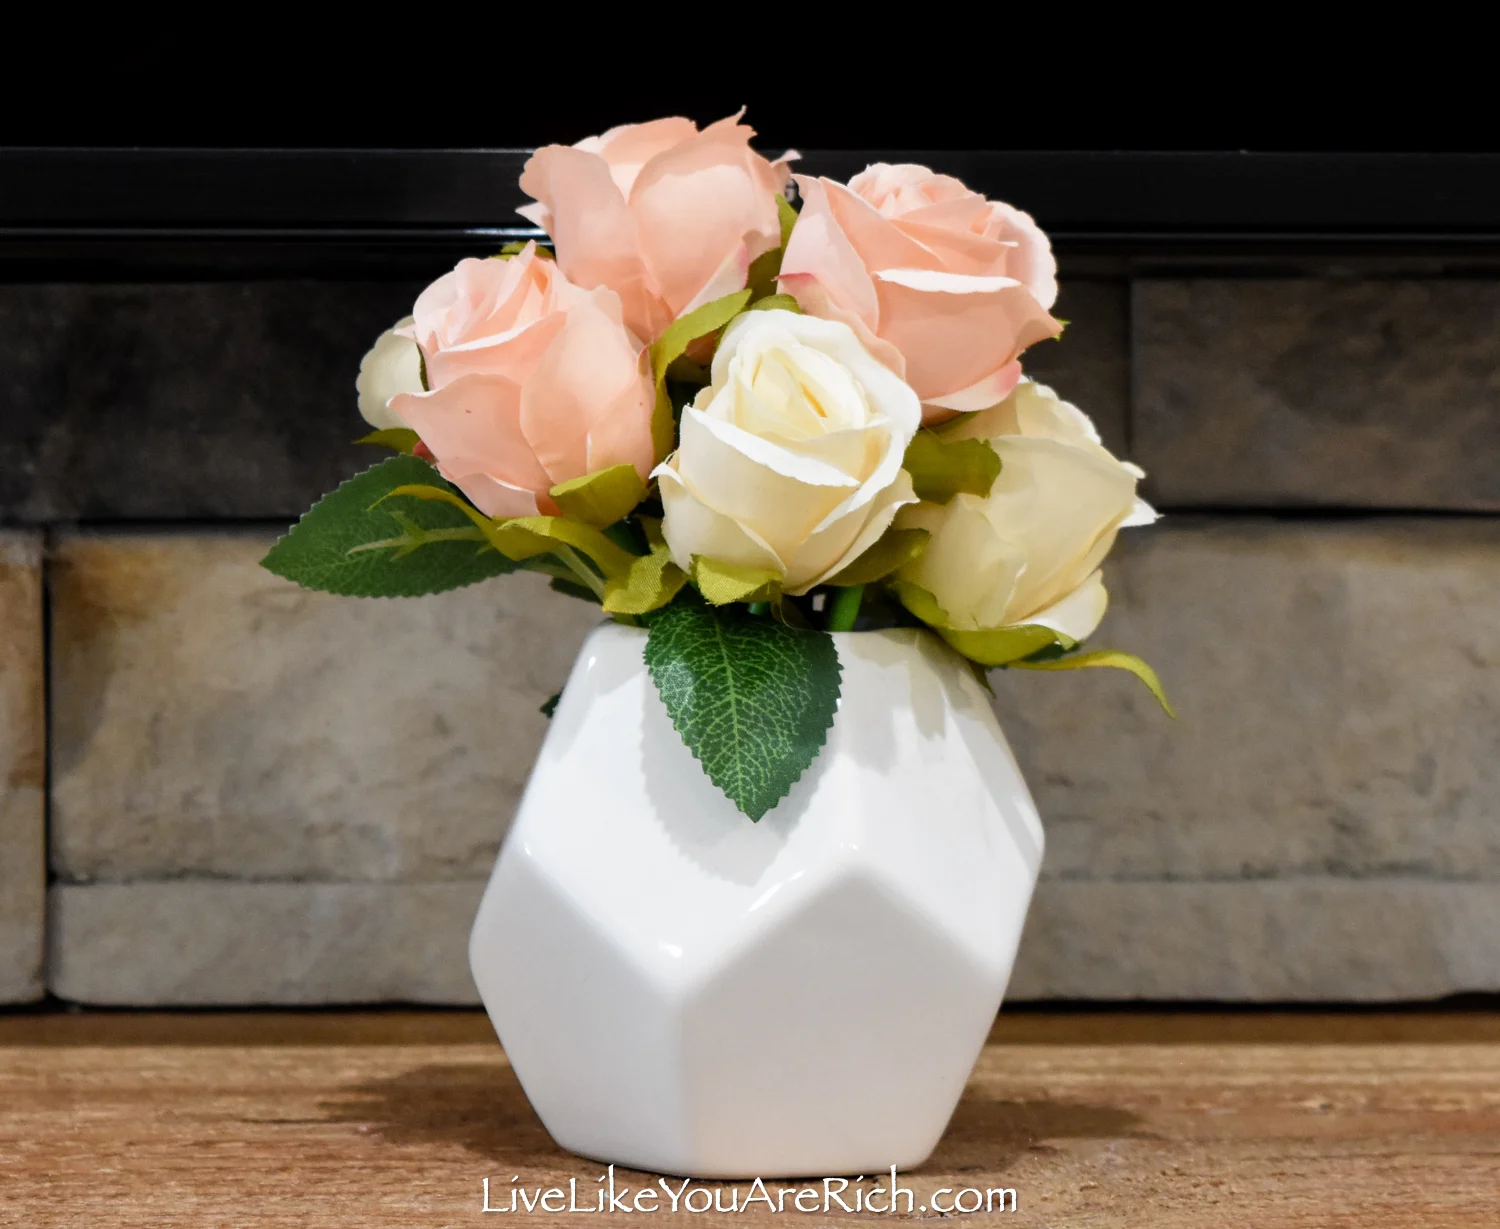 Rose in a white vase